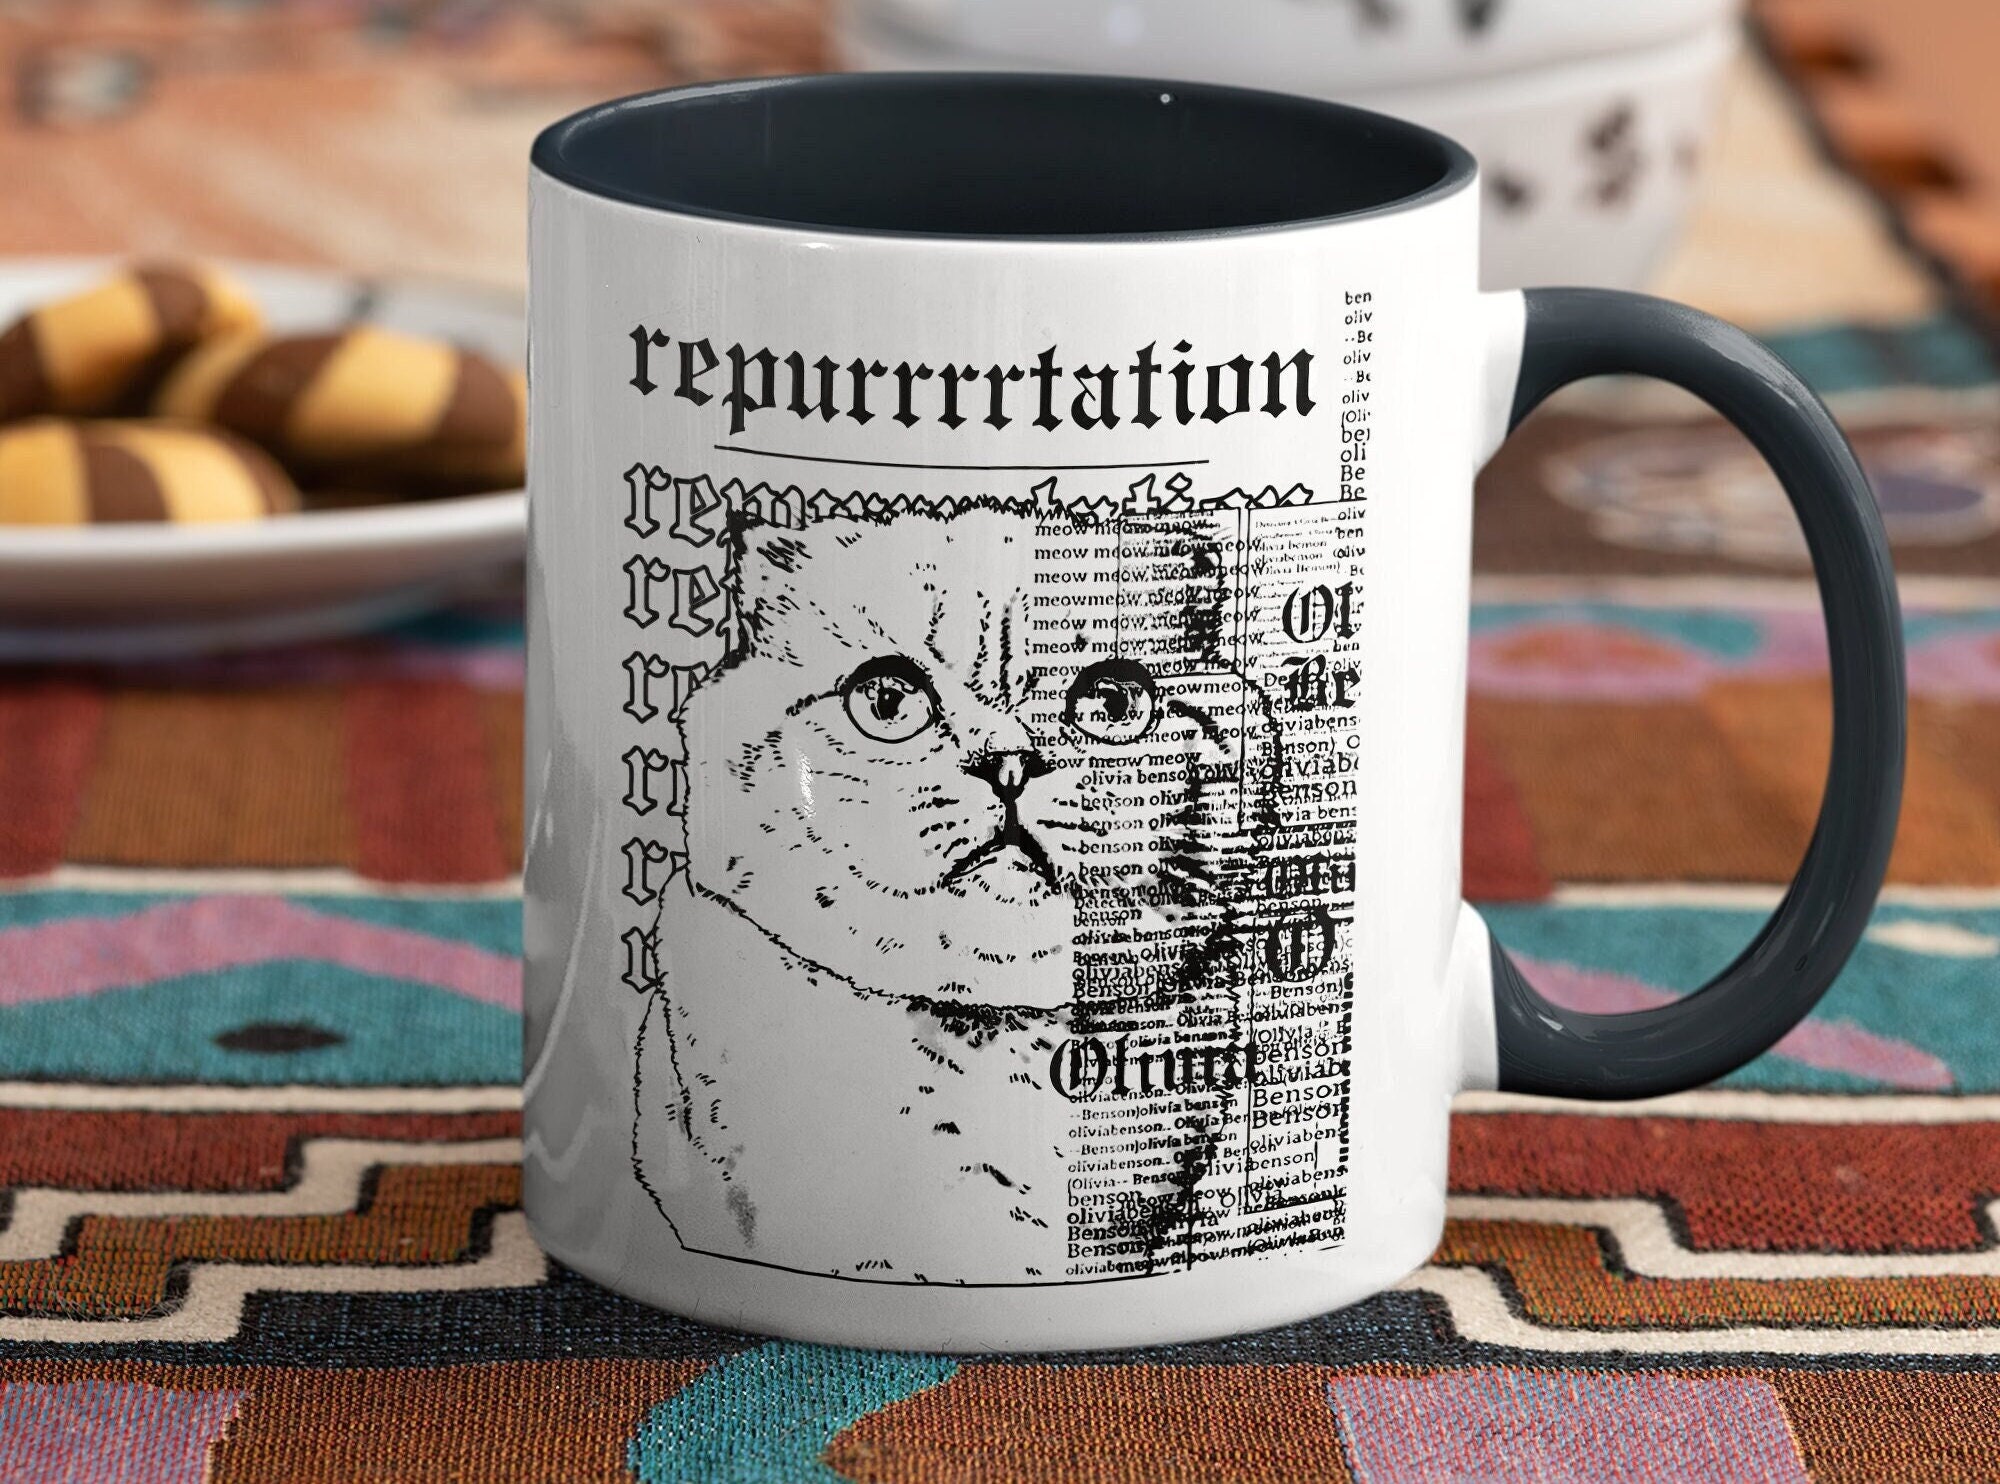 Discover Repurrtation Cat Mug, Karmaa Is A Cat Mug, Cat Lover, Music Album Inspired Mug